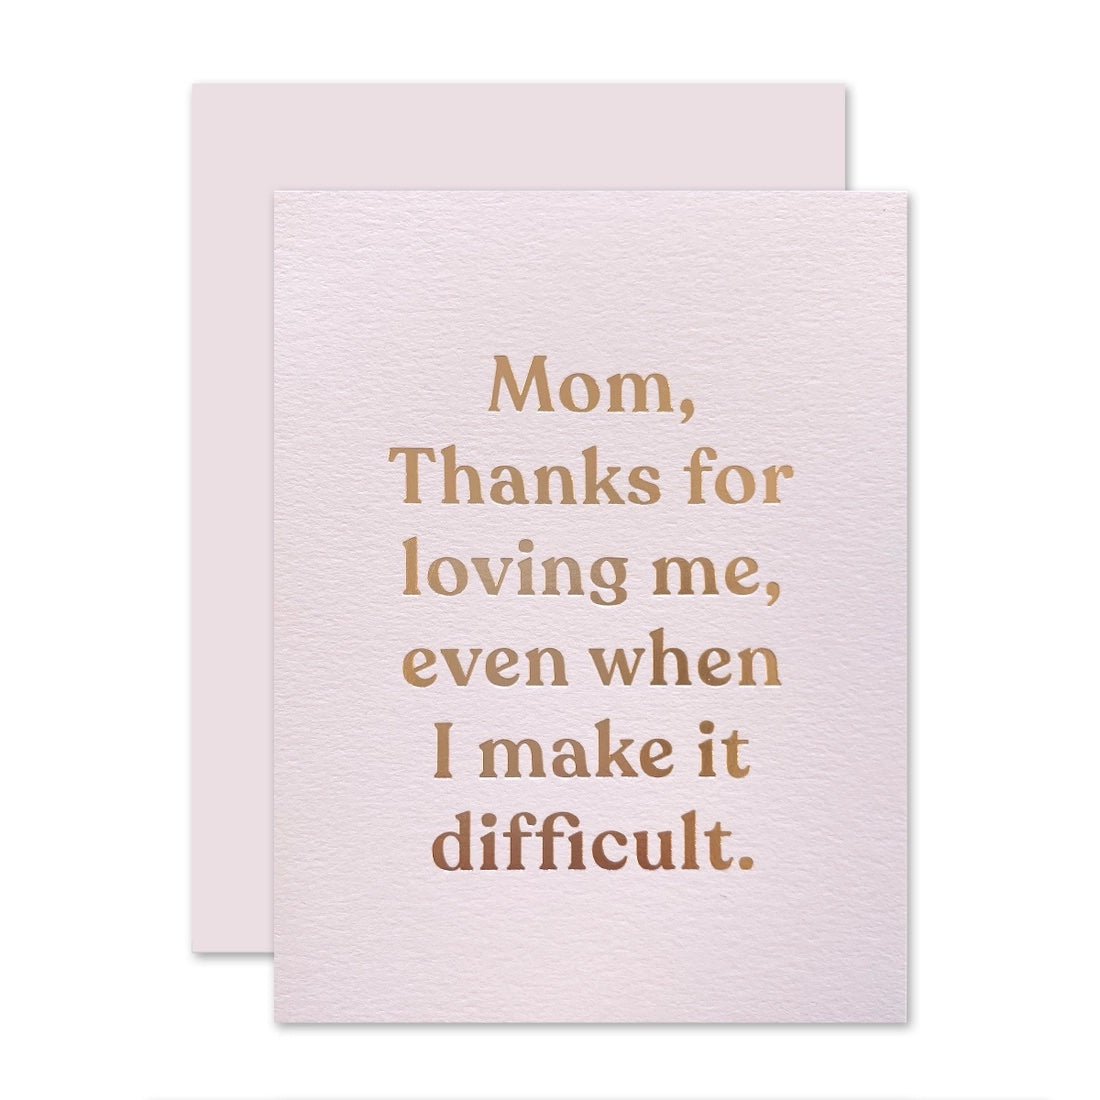 LOVING MOM CARD